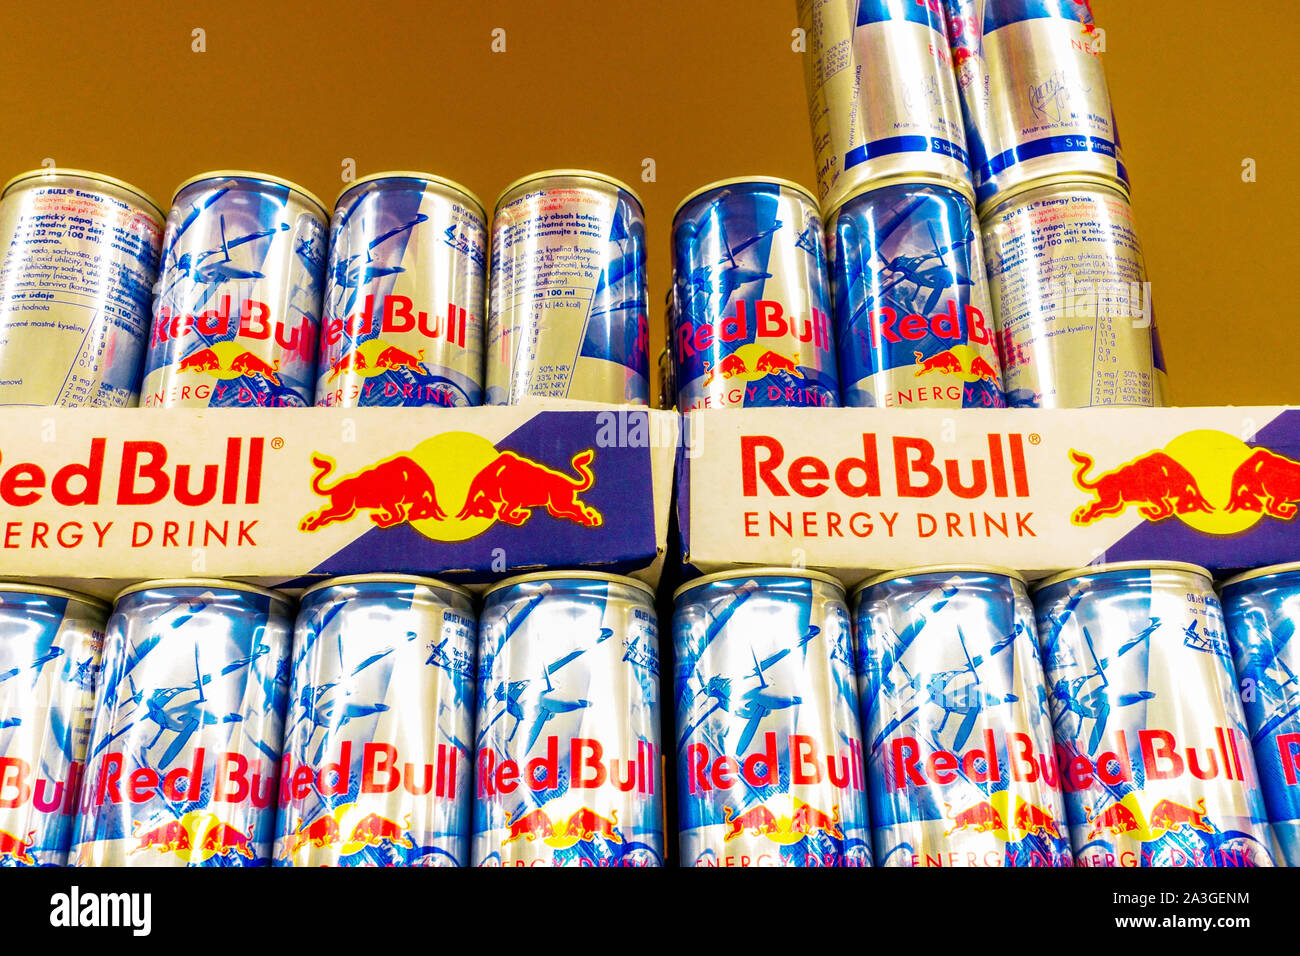 Red bull cans -Fotos und -Bildmaterial in hoher Auflösung – Alamy